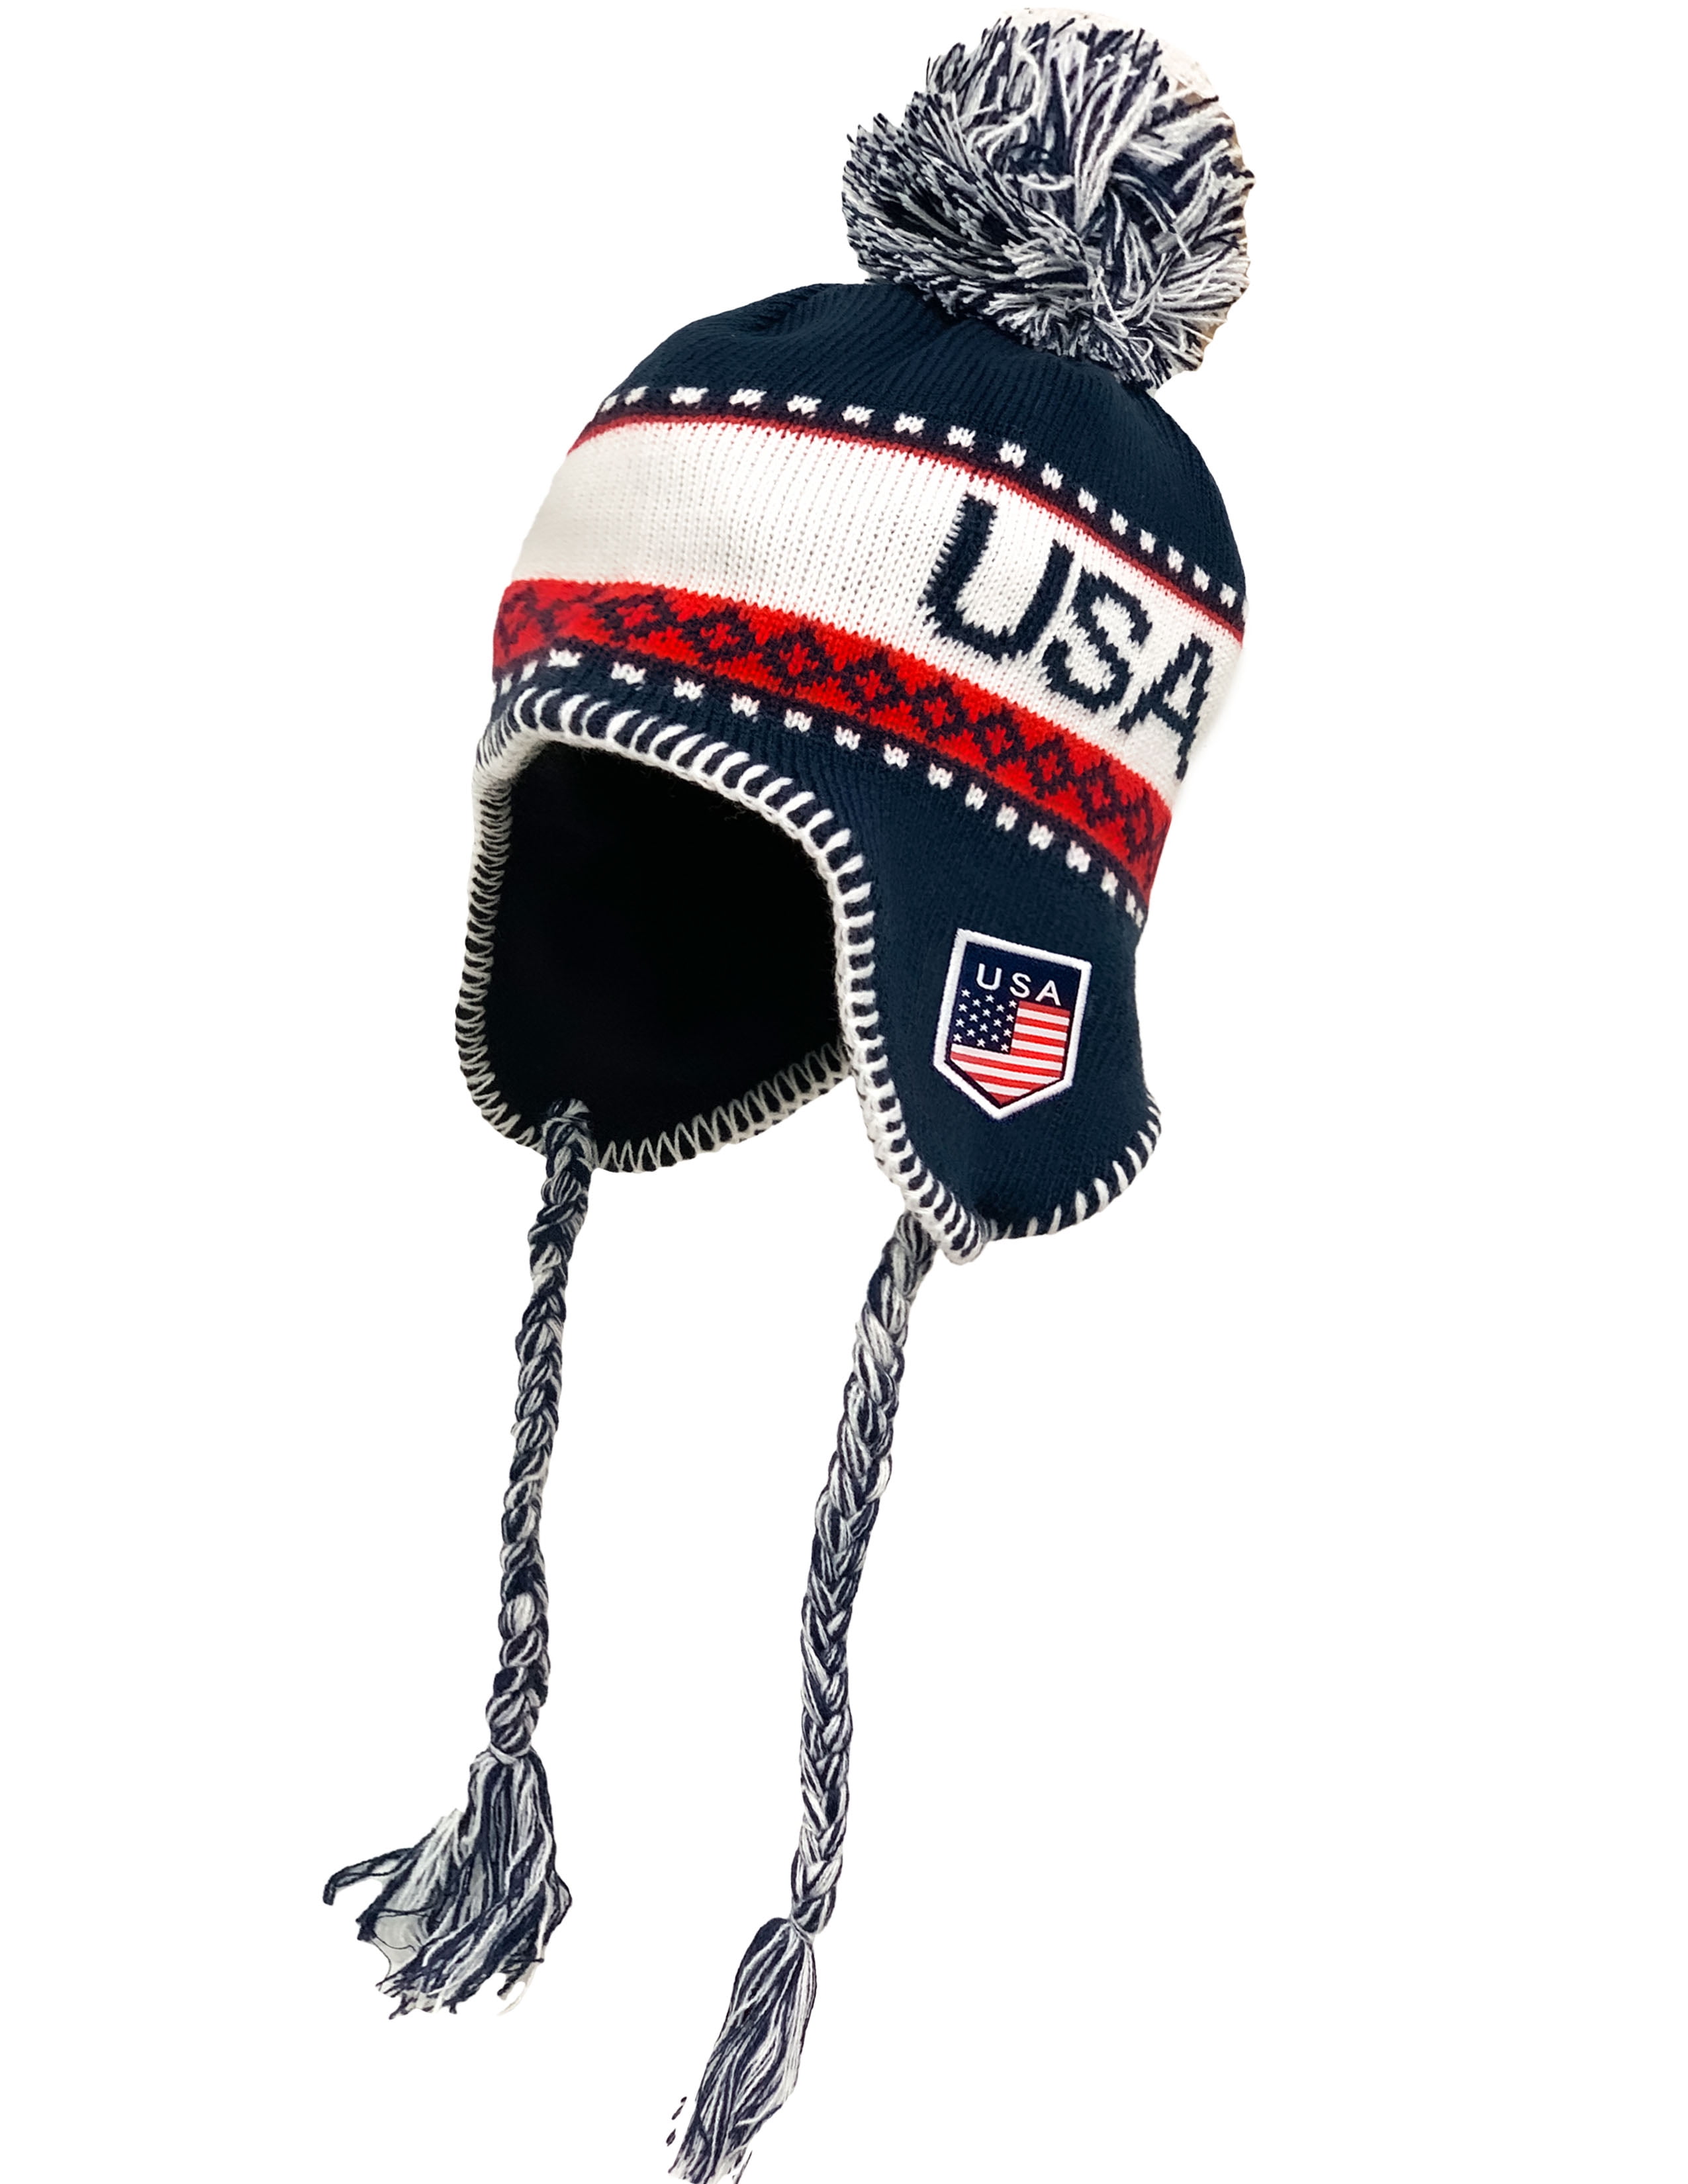 optie Zielig Wereldrecord Guinness Book USA Winter Hat, Knit Beanie Snow Winter Hat Ski Cap with Pom, USA Peruvian  Hat with Ear Flaps and Fleece Lining - Walmart.com